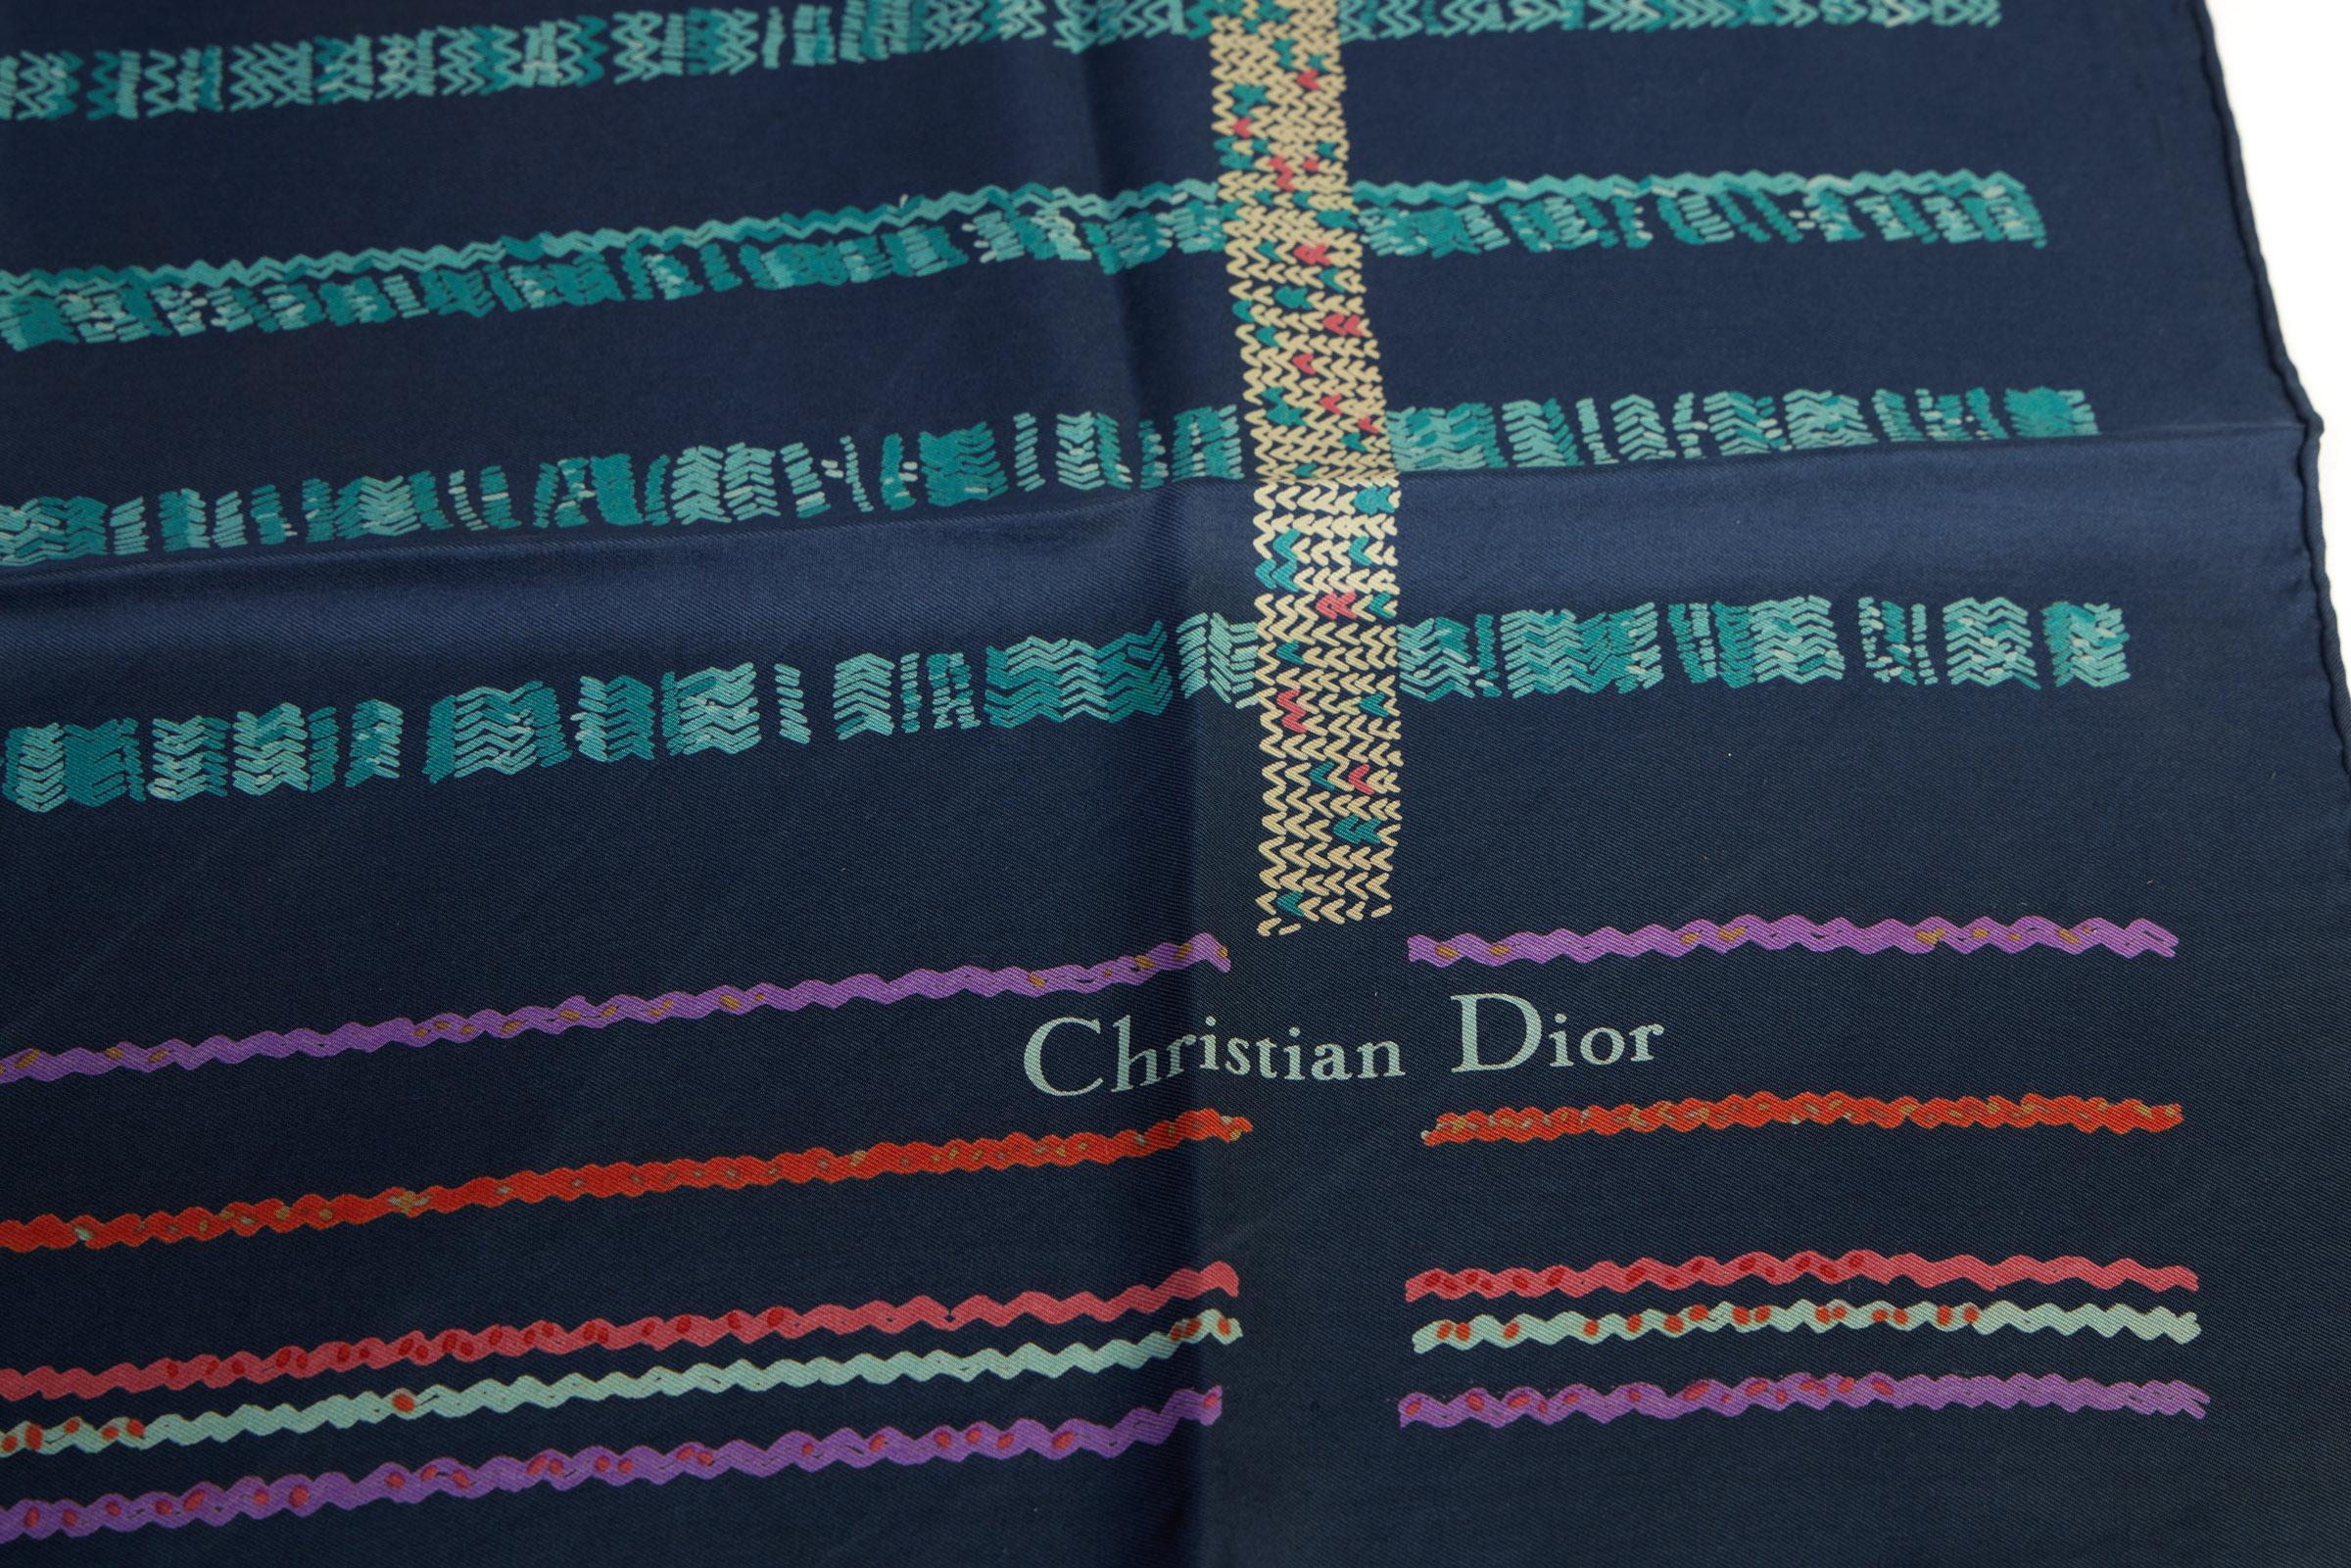 Christian Dior Paris vintage navy silk scarf with geometric design. Hand rolled edges.